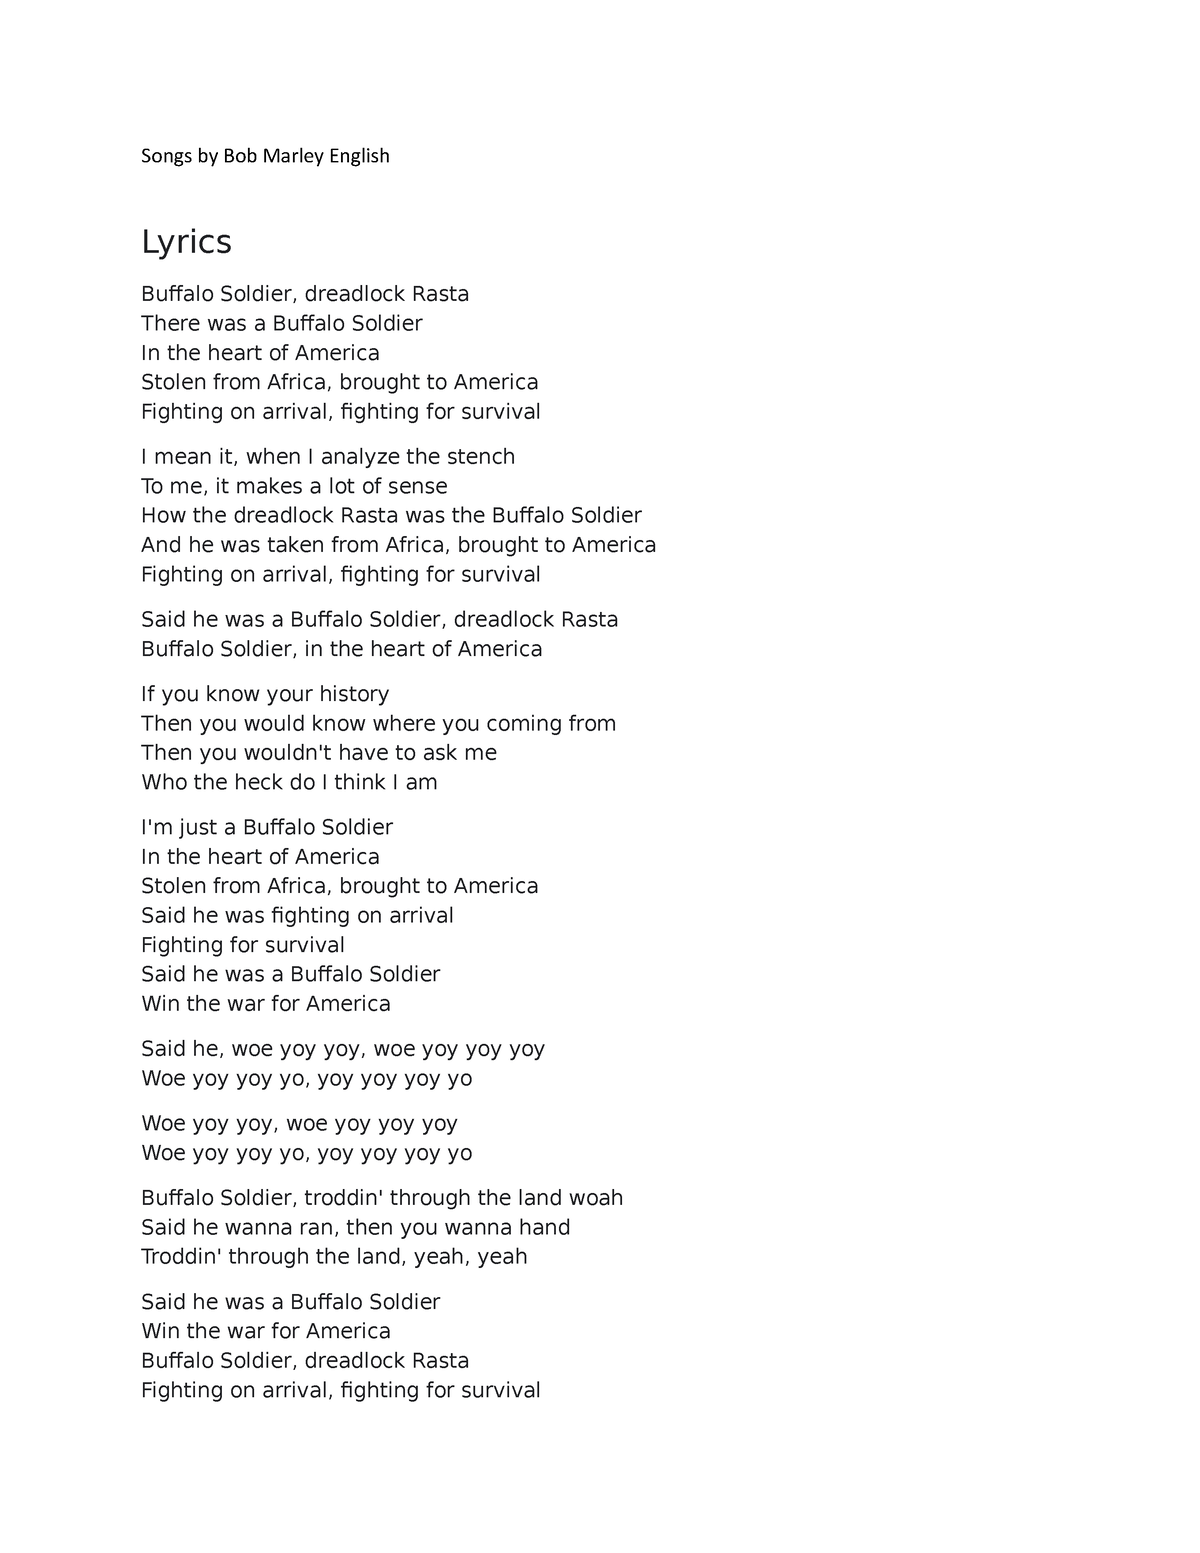 400 - Years Lyrics - Bob Marley - Only on JioSaavn